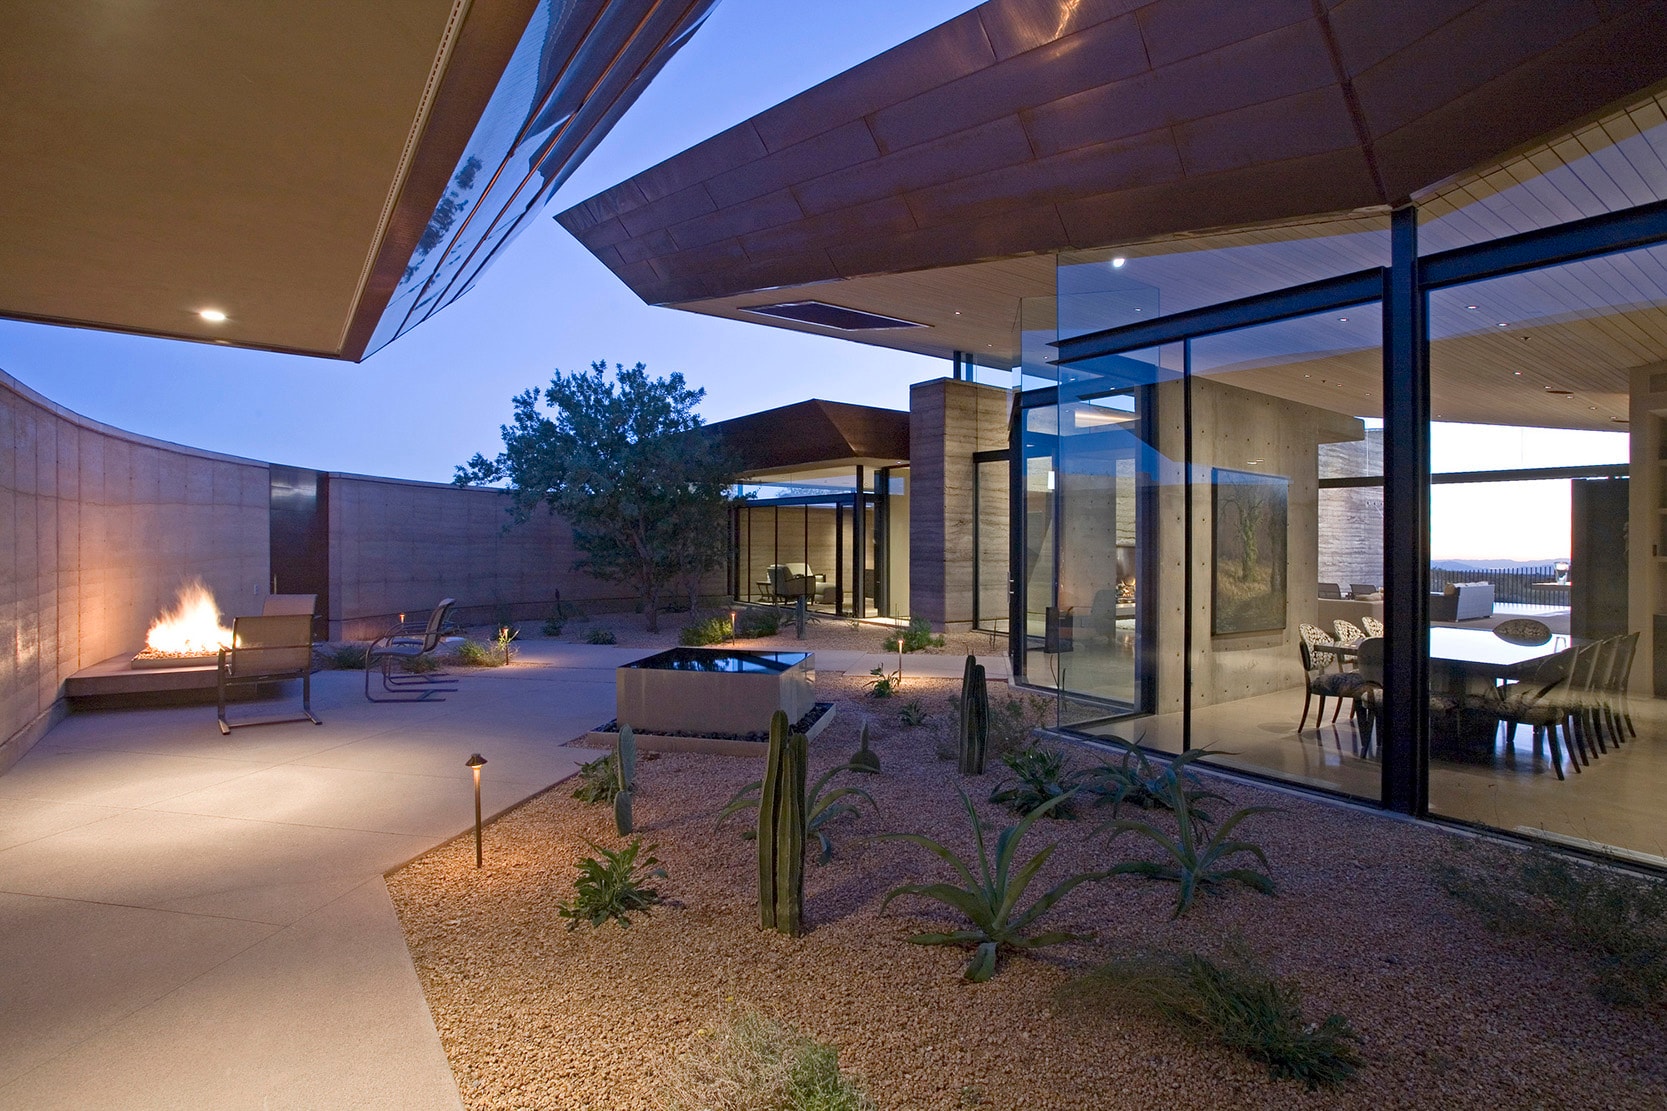 Desert Wing Kendle Design Collaborative Architecture Modern Interior Exterior Design Houses Homes Scottsdale United States America Swimming Pool Desert